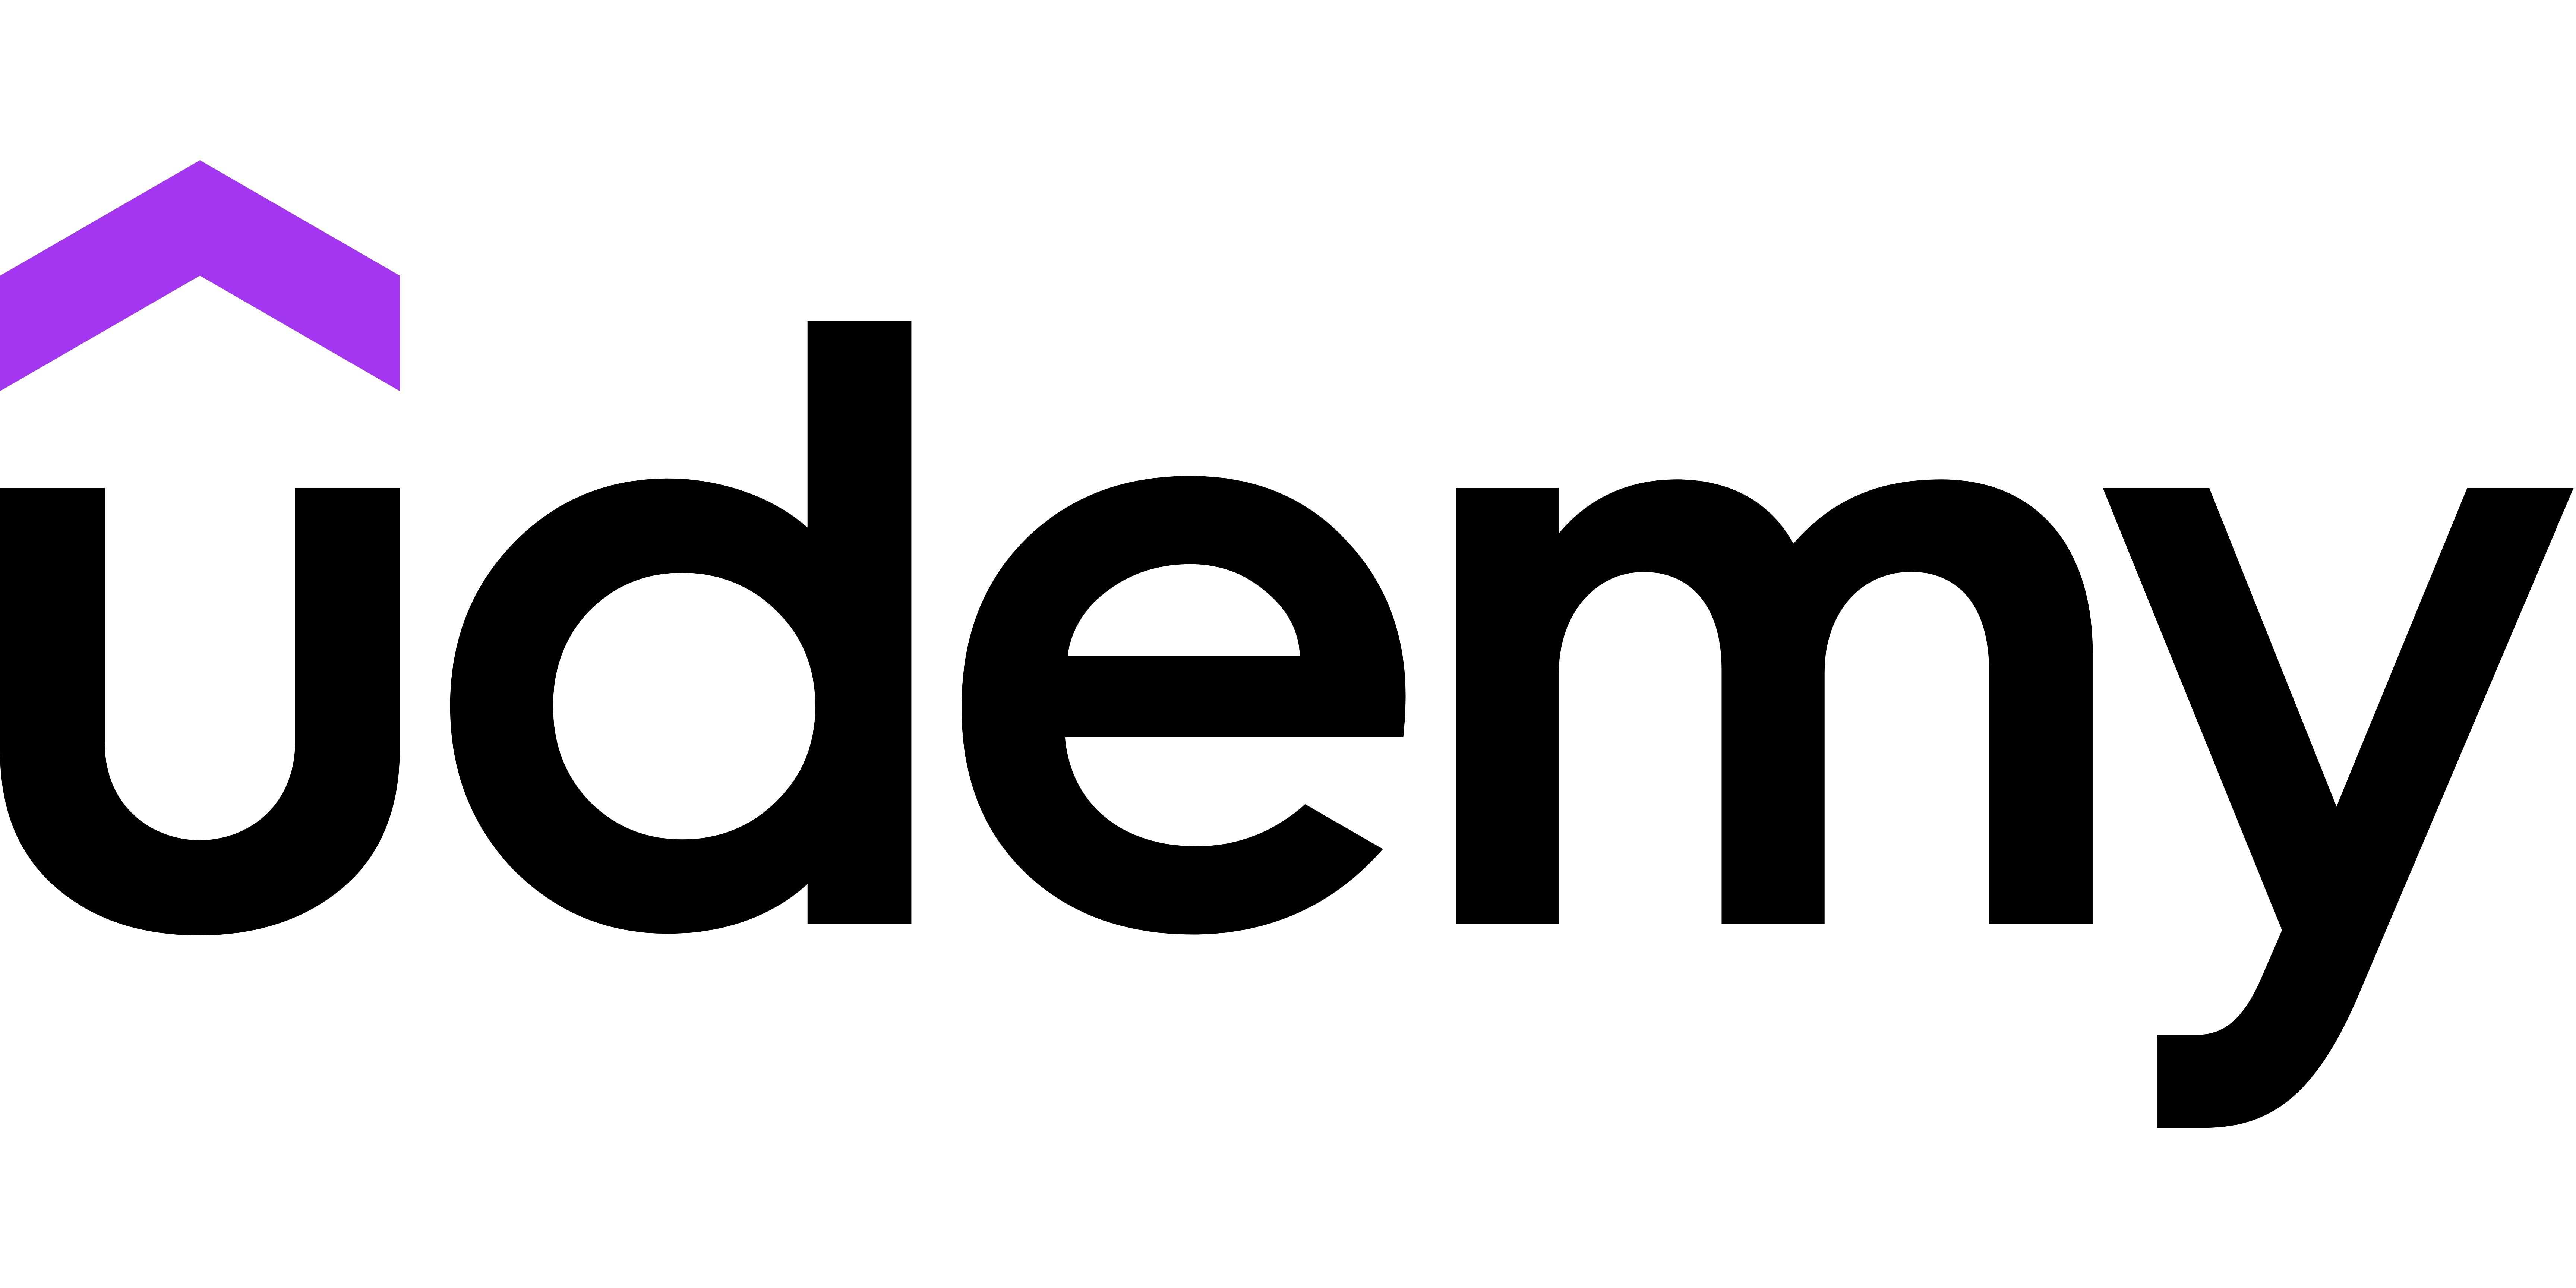 New Udemy Logo Black